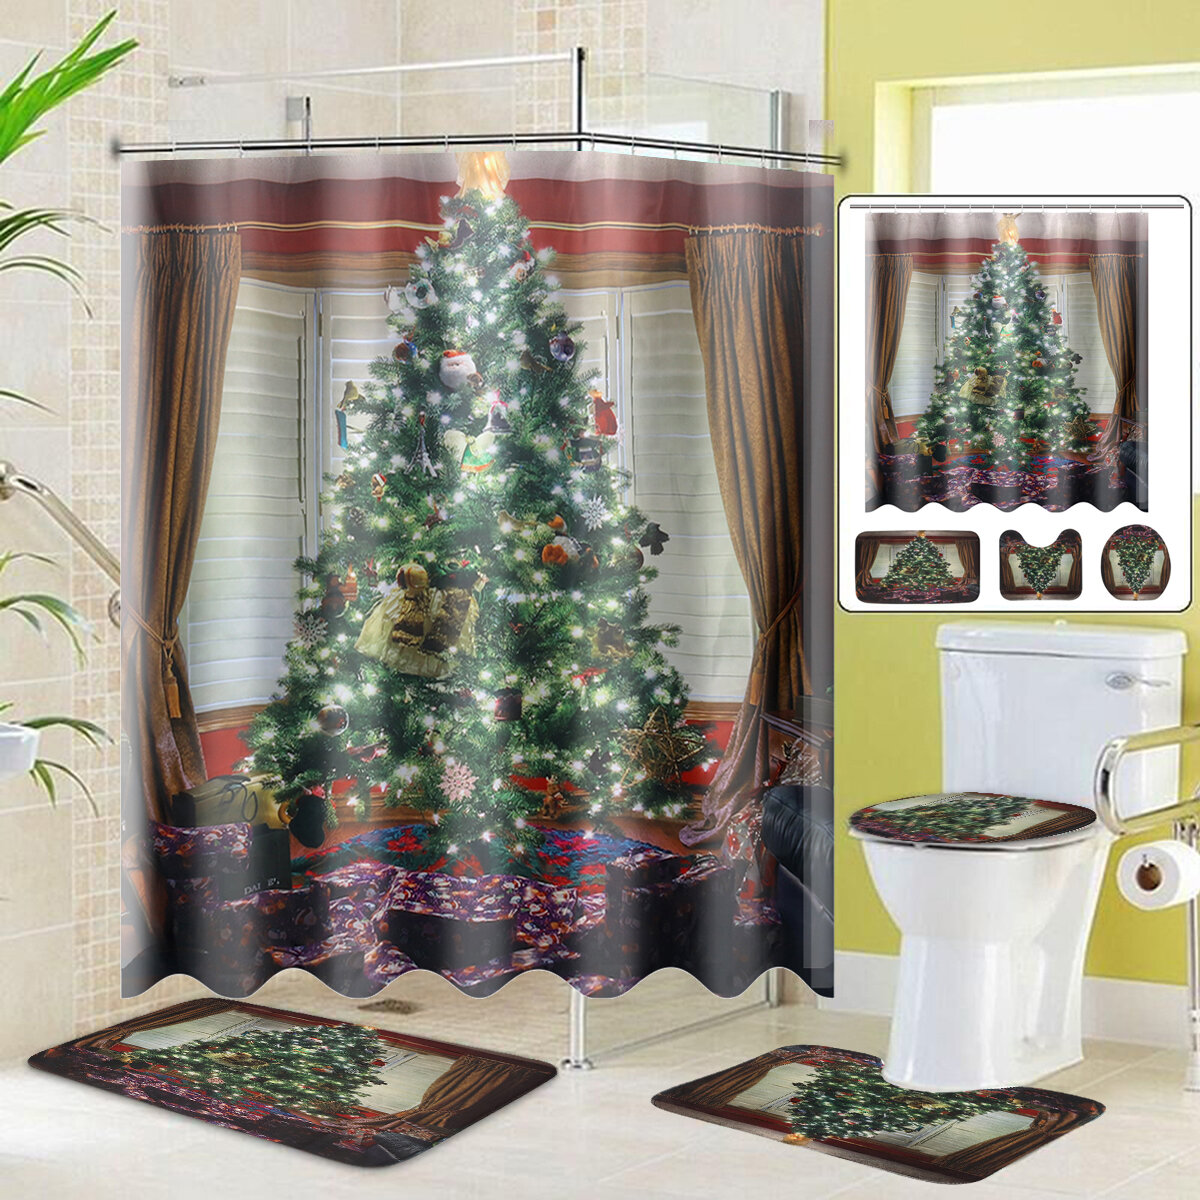 Merry Christmas Tree Shower Curtain Bath Pad Pedestal Rug Lid Toilet Cover Mat for Bathroom 2020 Christmas Decoration